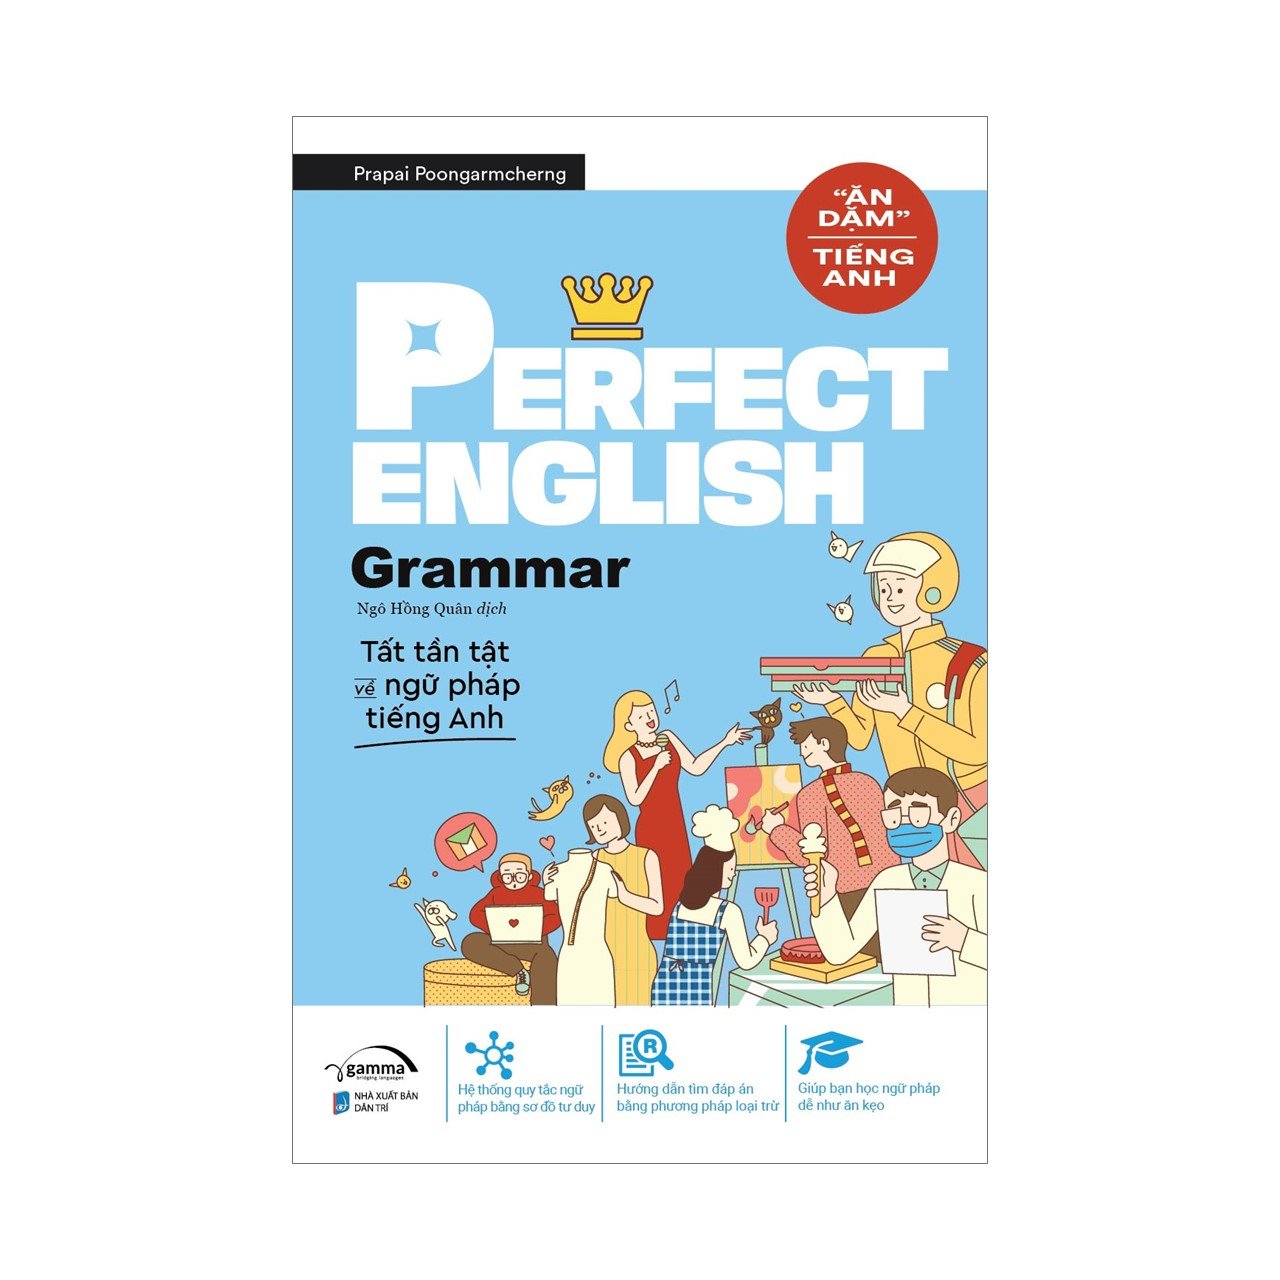 Combo Ăn Dặm Tiếng Anh - Perfect English: Vocabulary, Grammar, Conversation